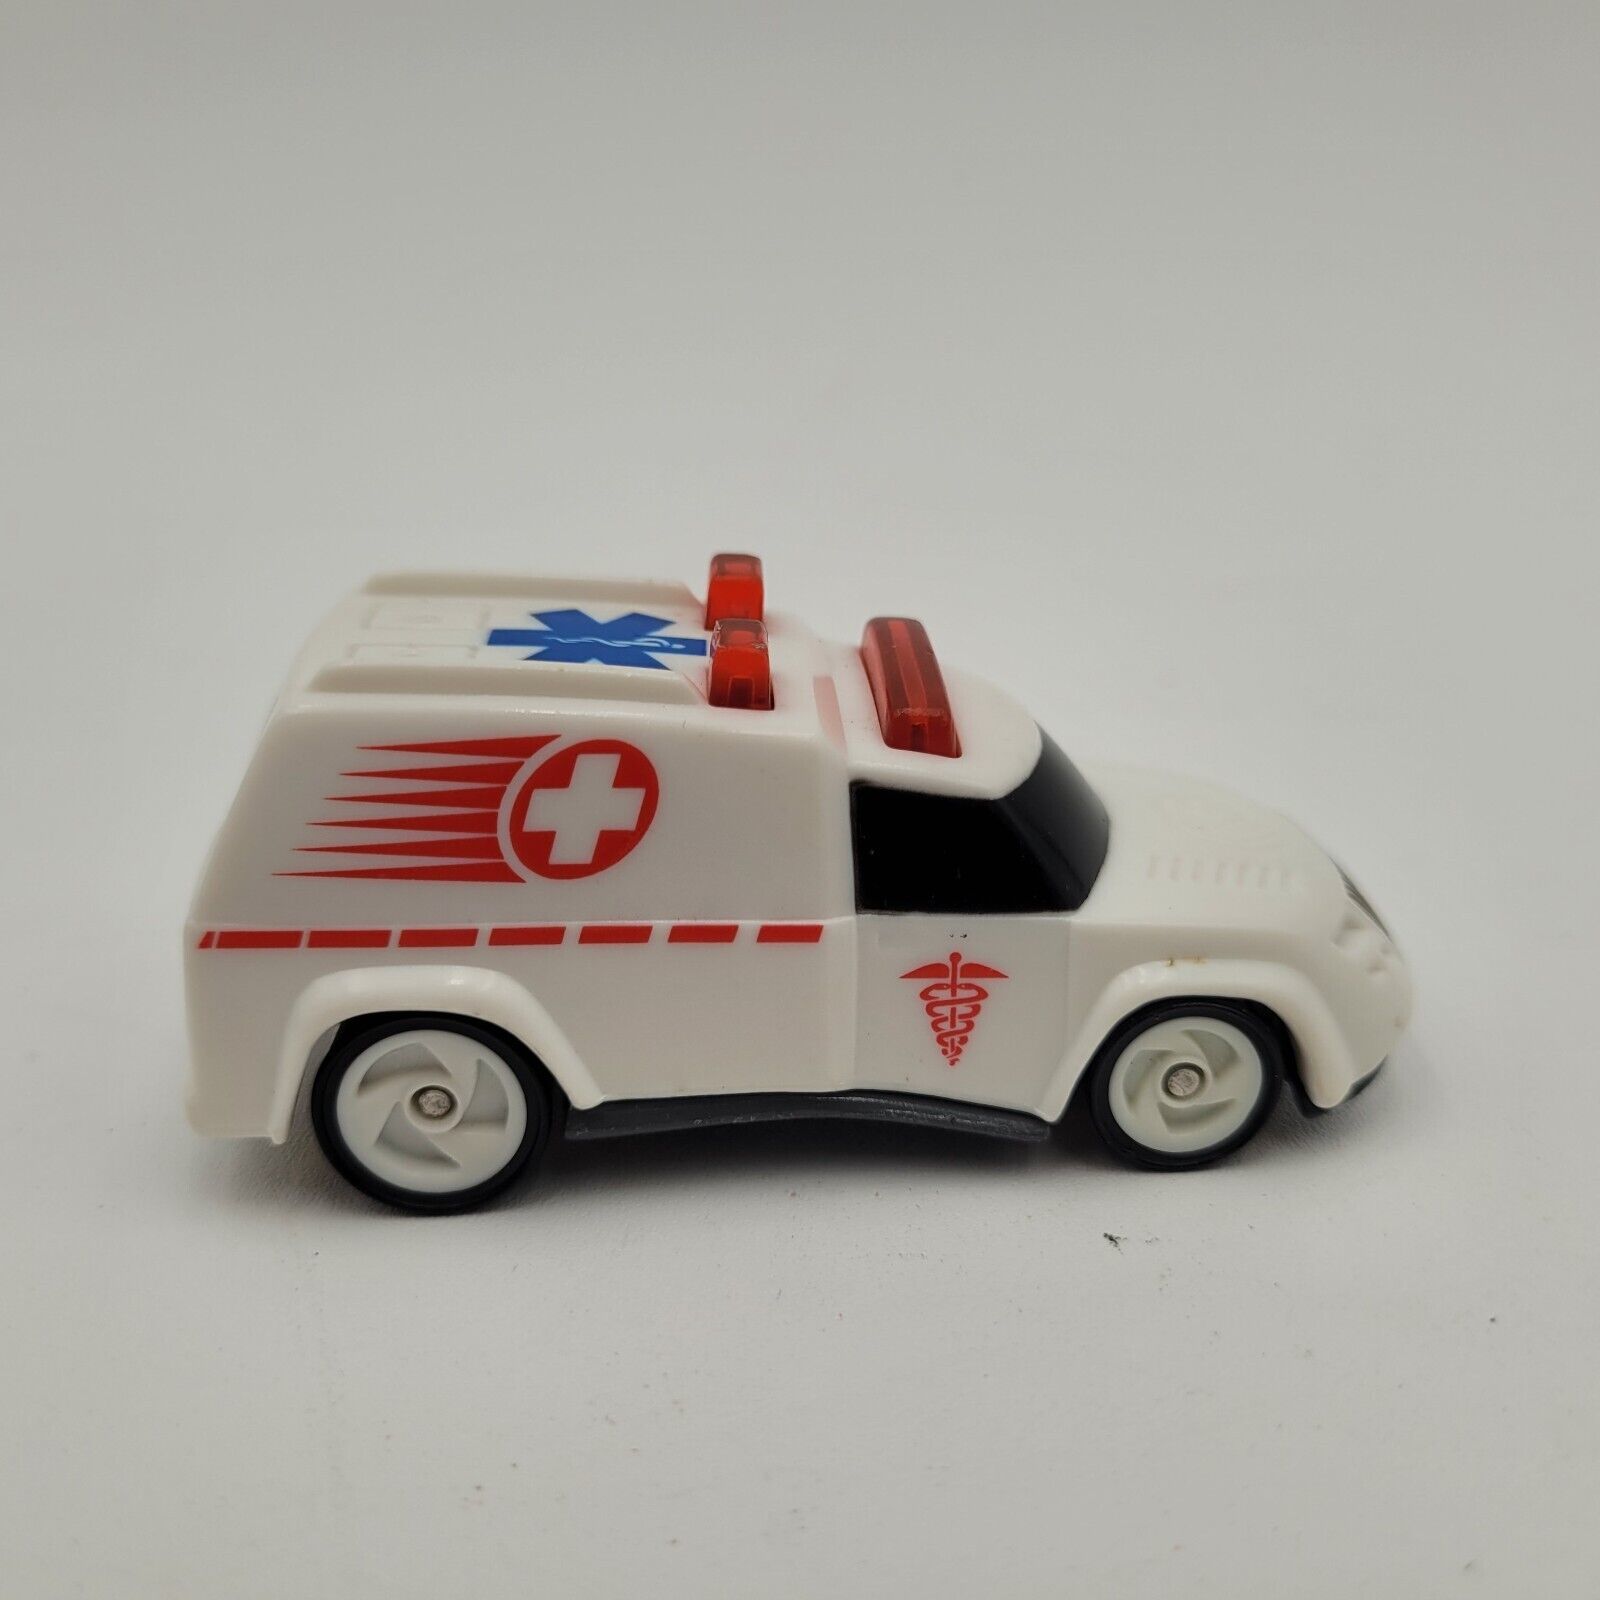 1994 Hot Wheels Ambulance Mattel Rare Vintage Medical Emergency White Toy Car - $3.95